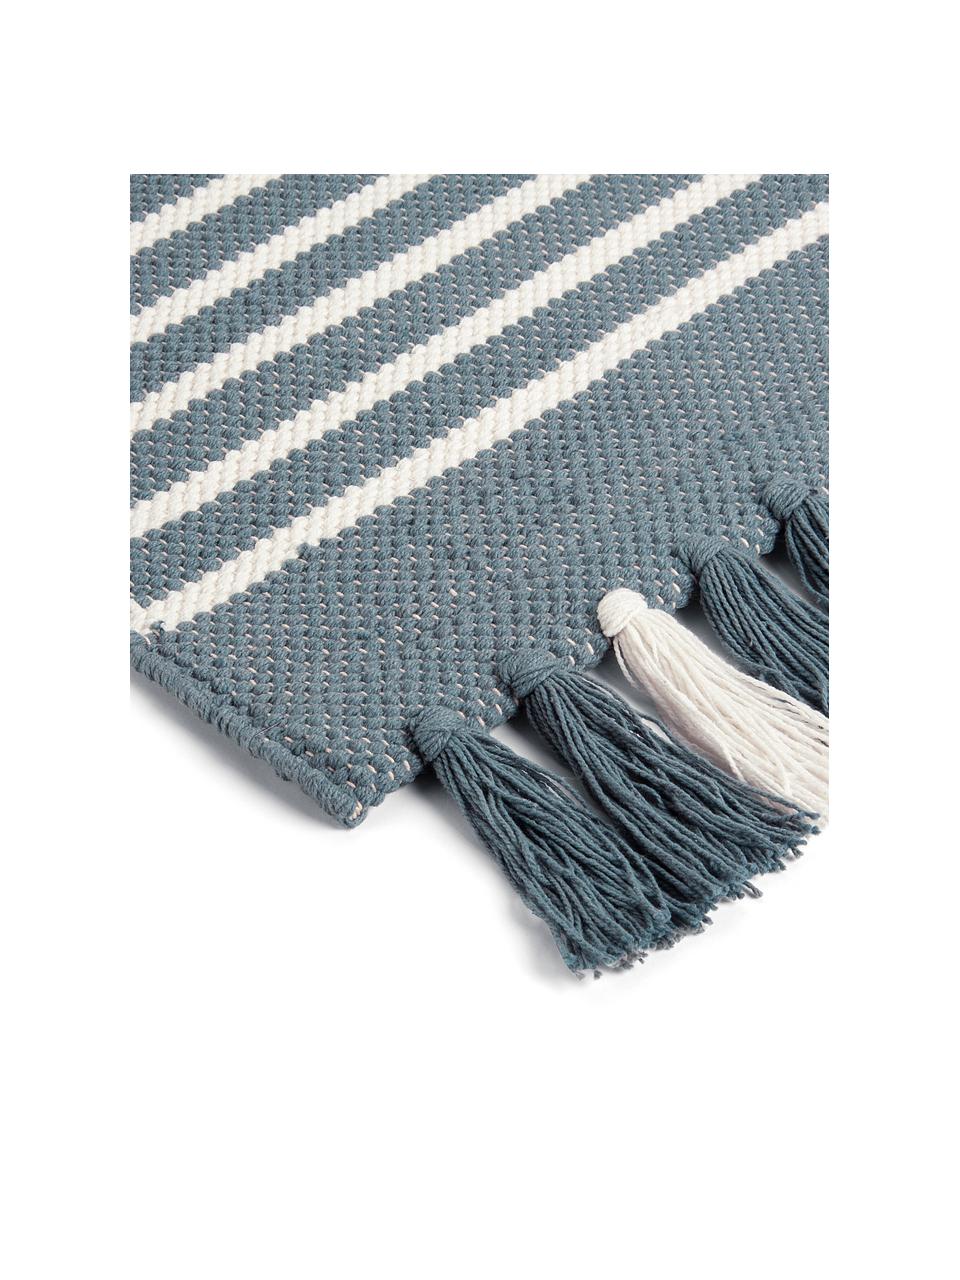 Tappeto bagno con frange Stripes & Structure, 100% cotone, Blu, bianco latteo, Larg. 60 x Lung. 100 cm